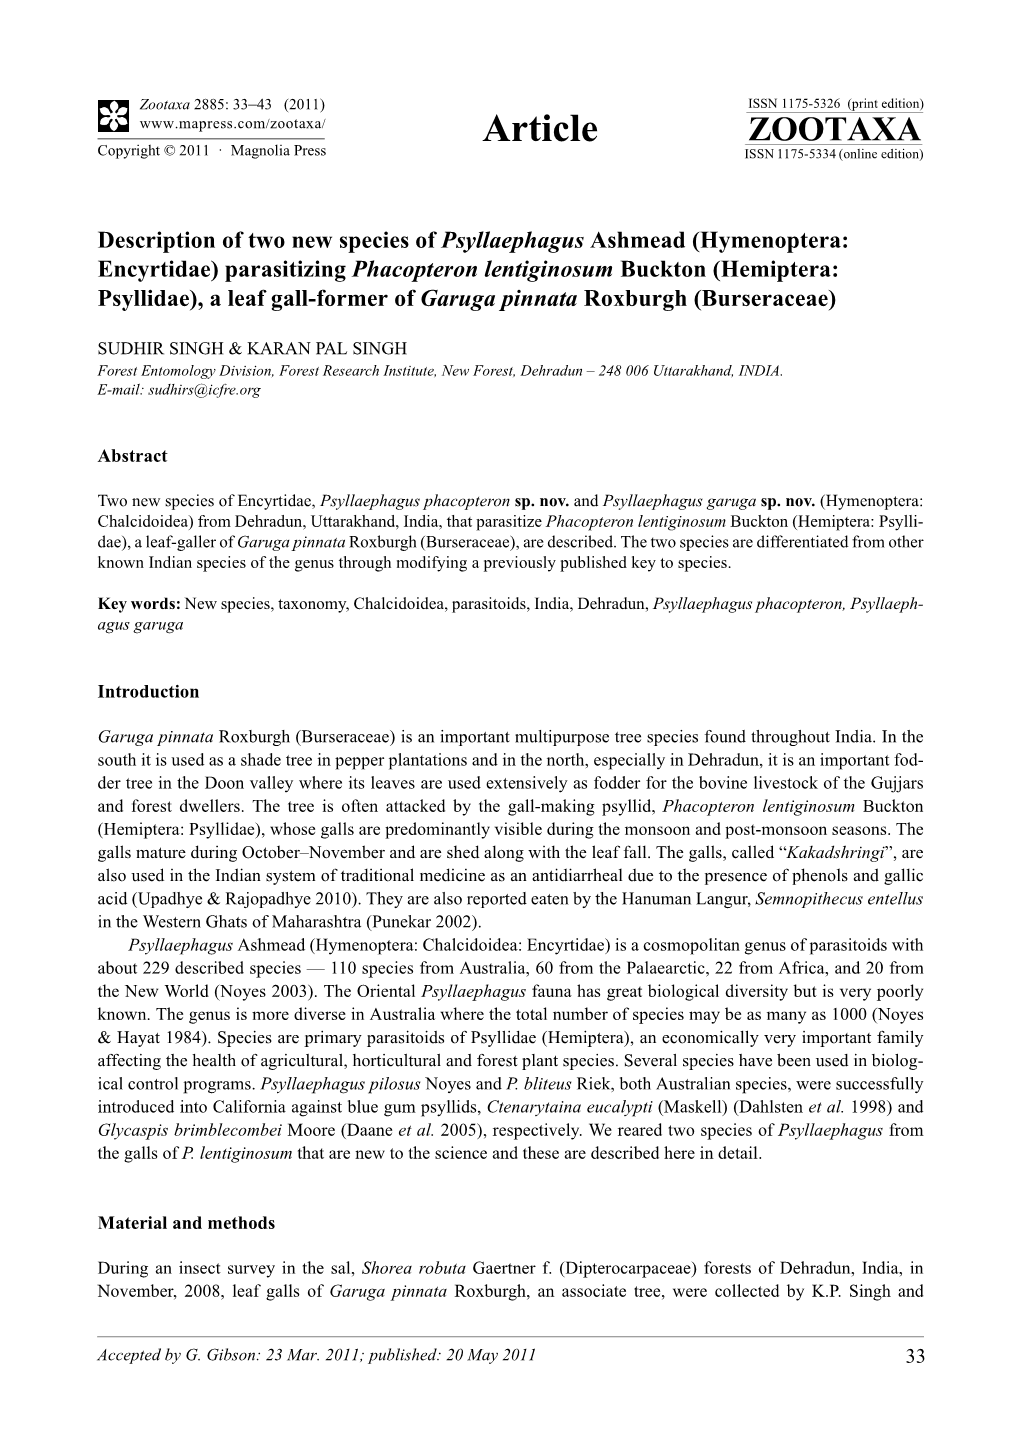 Description of Two New Species of Psyllaephagus Ashmead (Hymenoptera: Encyrtidae) Parasitizing Phacopteron Lentiginosum Buckton